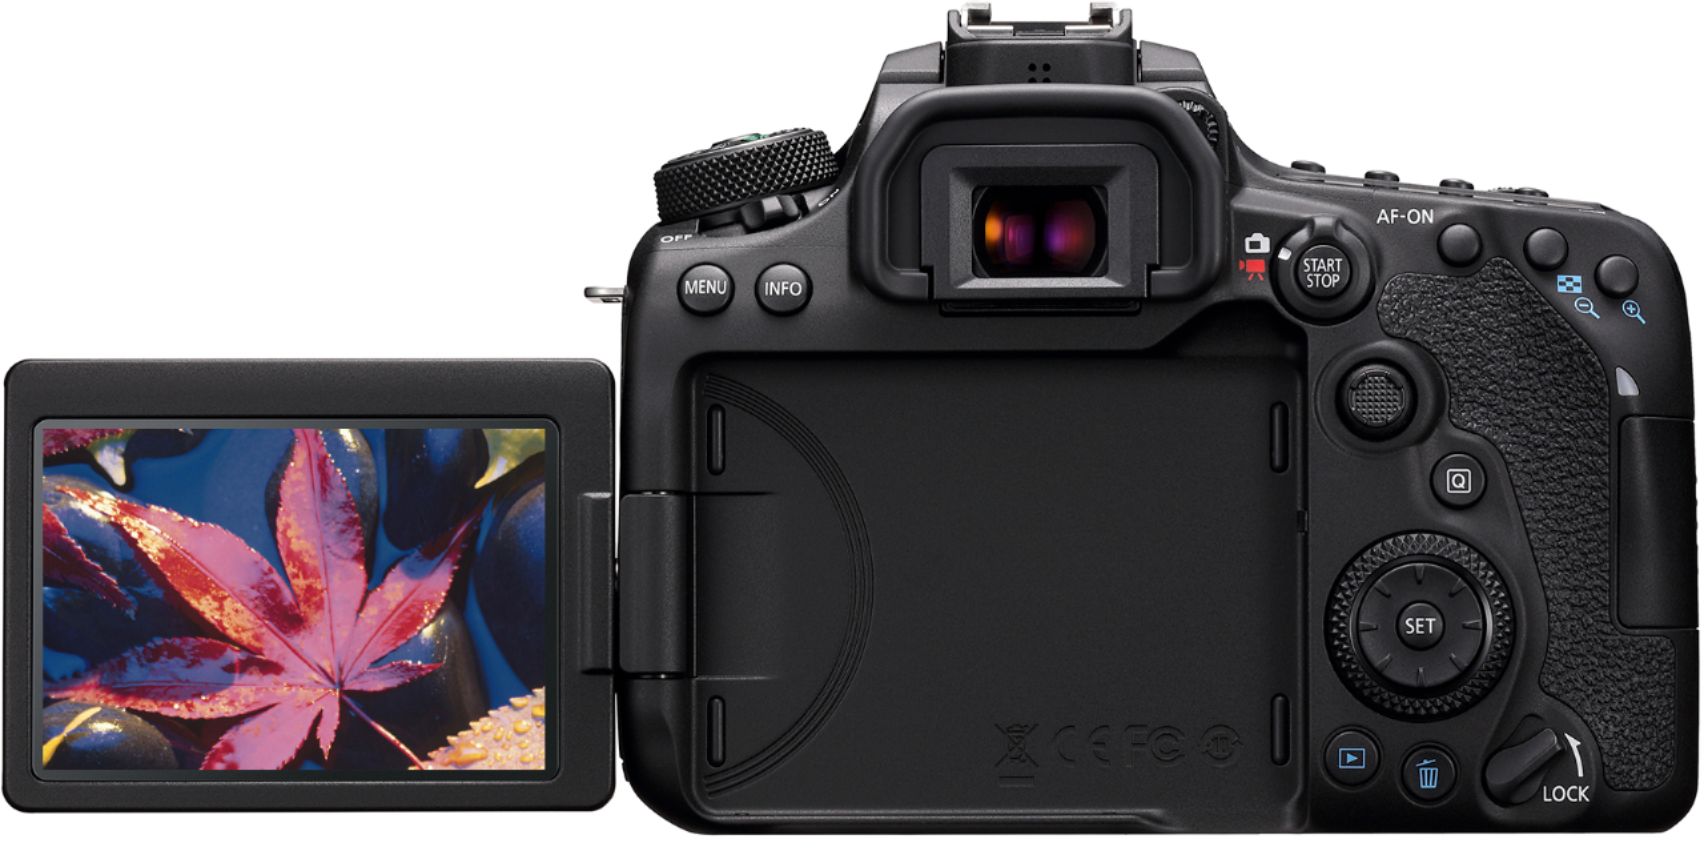 Canon - EOS 90D DSLR Camera (Body Only) - Black